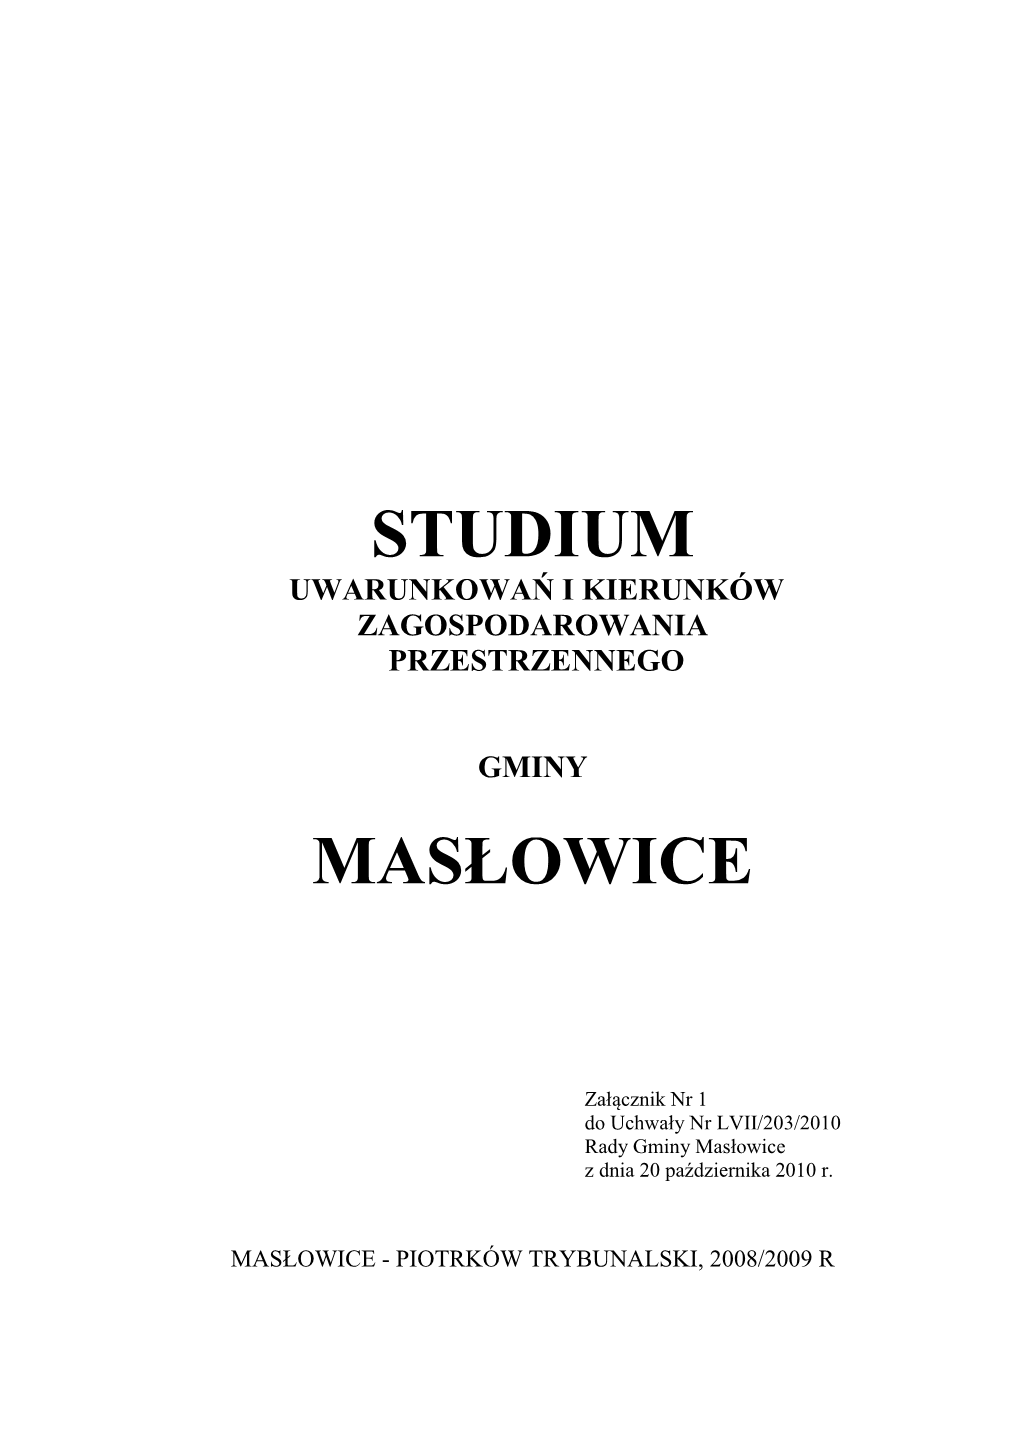 Studium Masłowice